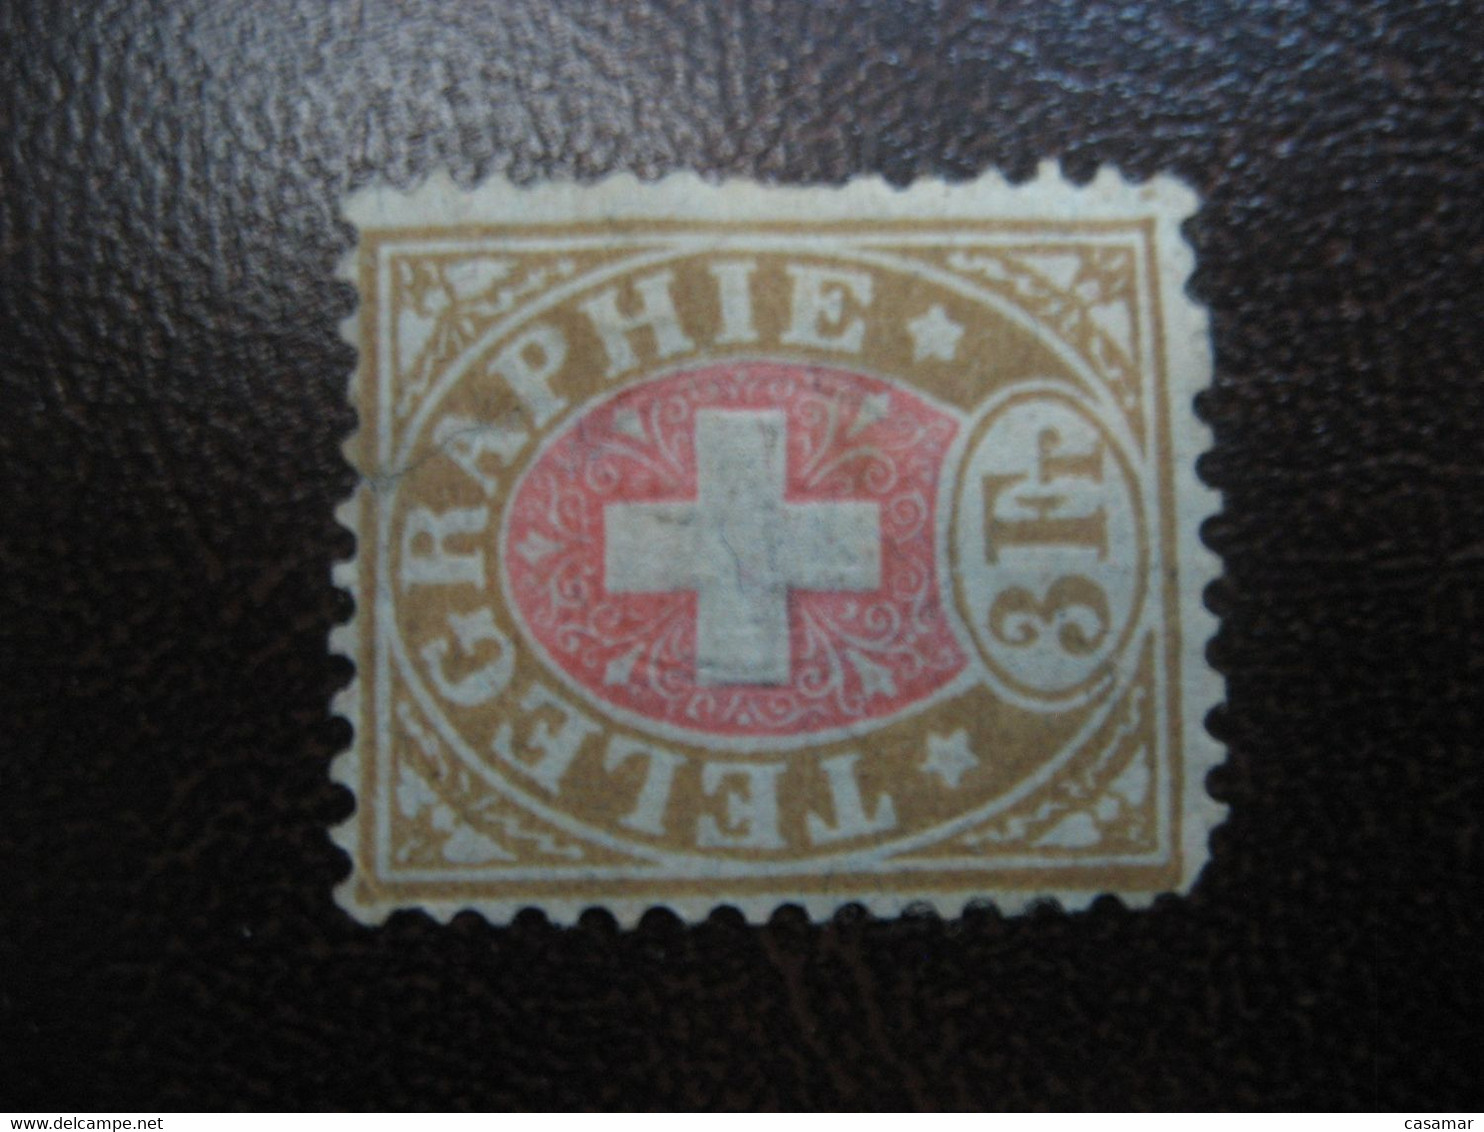 3Fr TELEGRAPHIE Telegraph SWITZERLAND Fiscal Revenue Suisse - Télégraphe